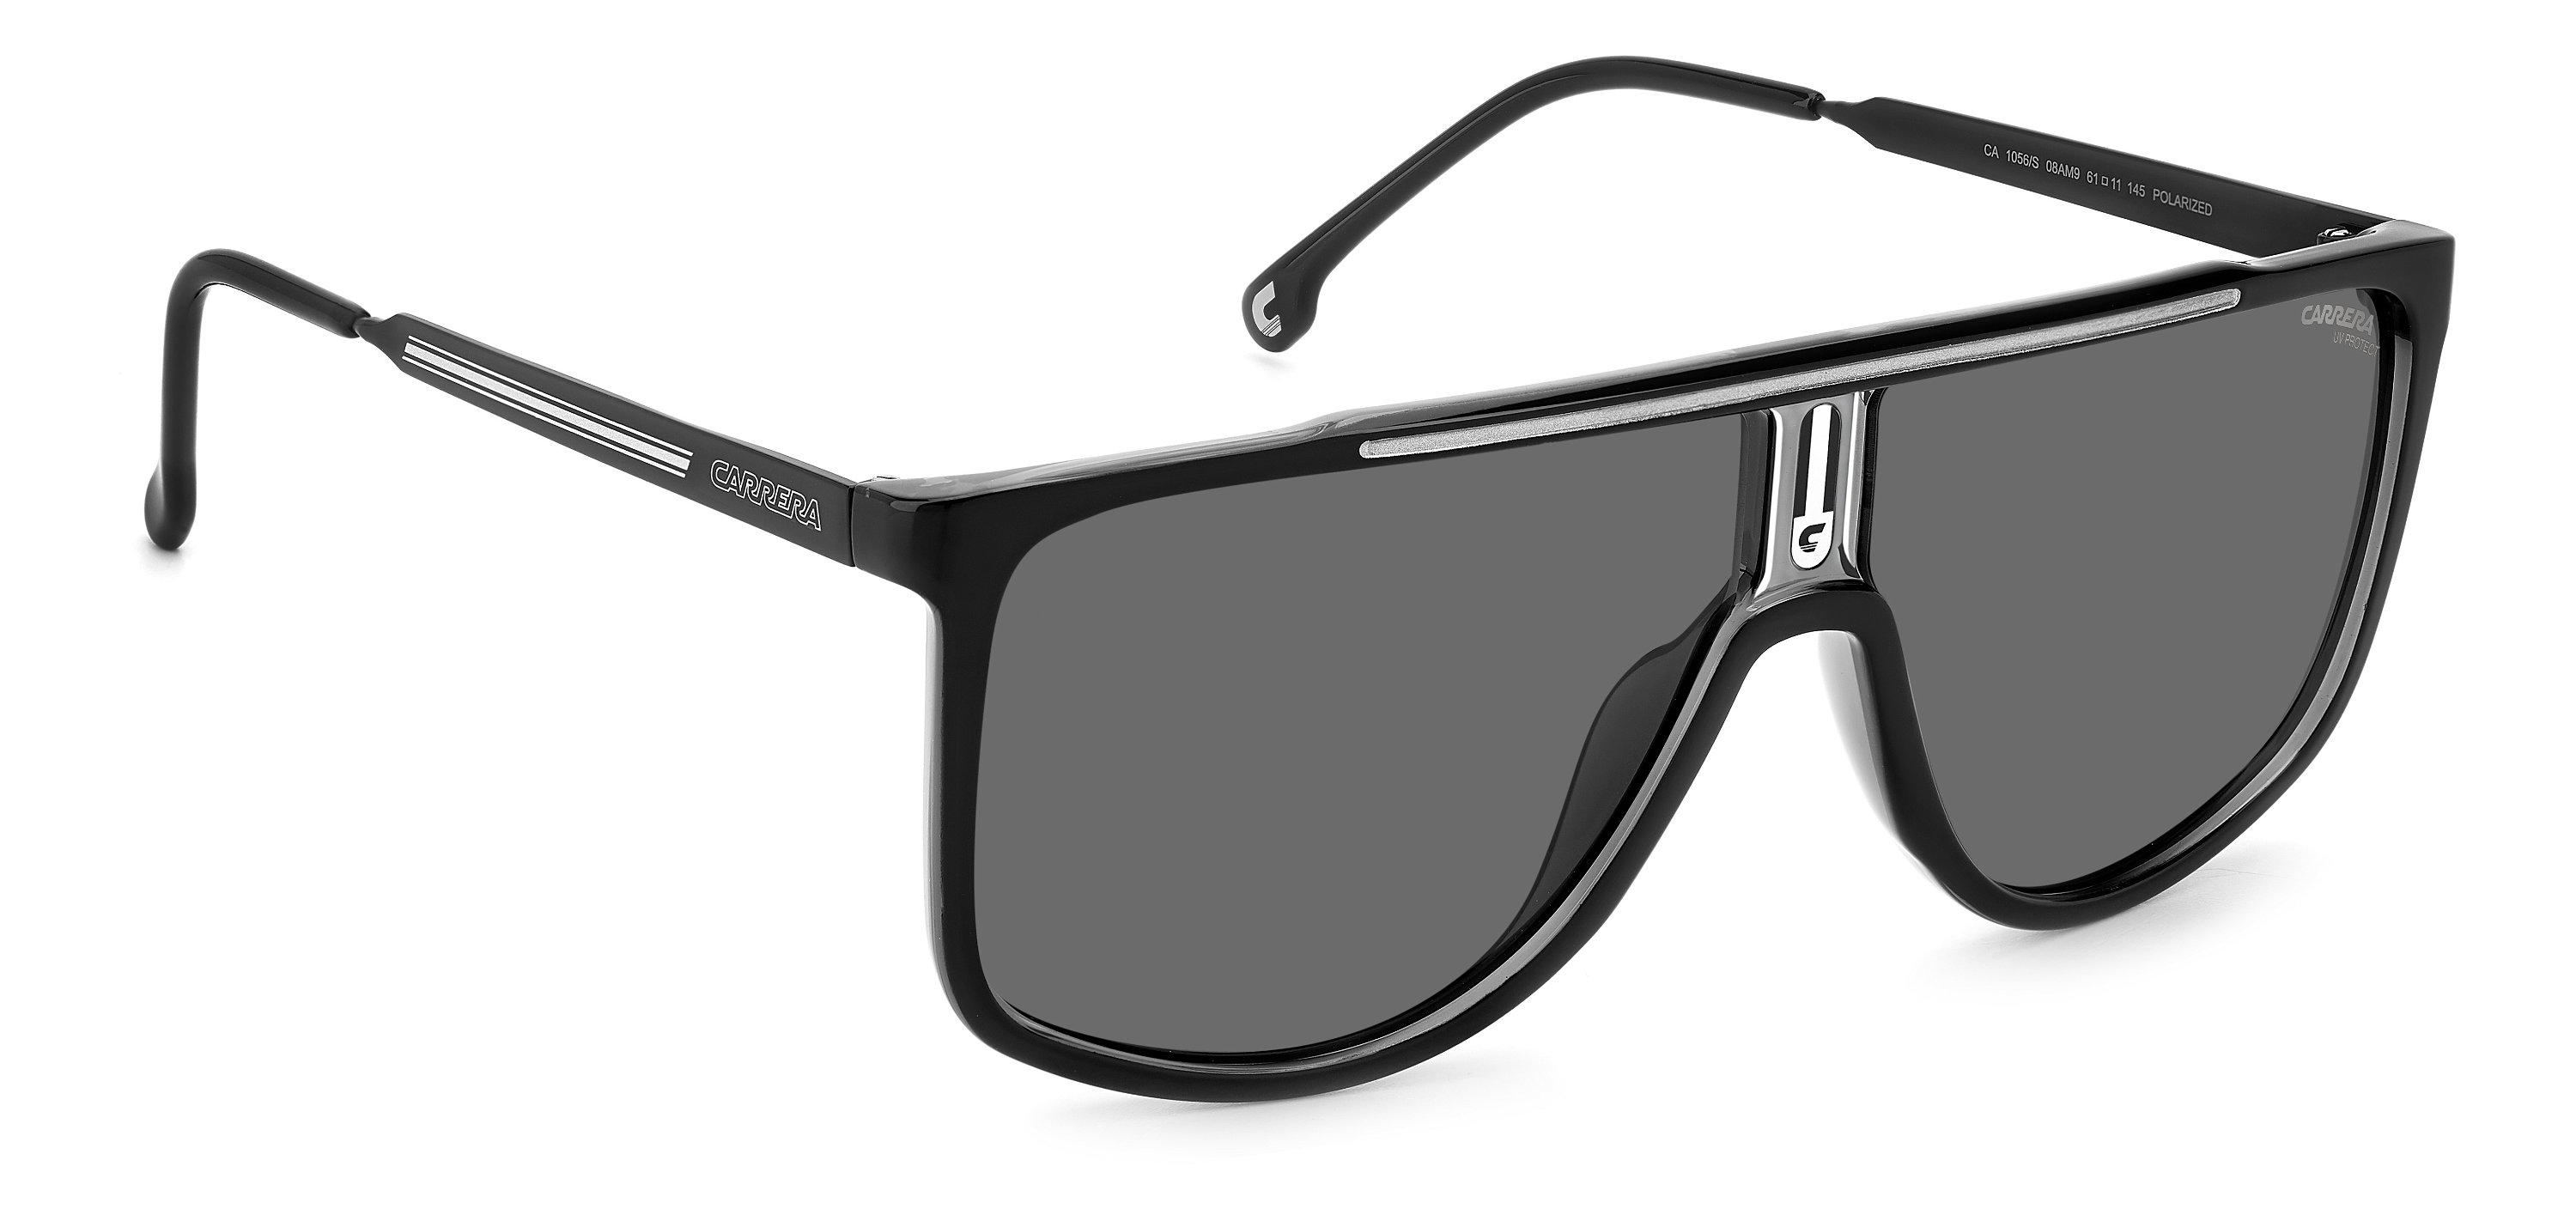 Carrera Sonnenbrille 1056/S 08A schwarz grau